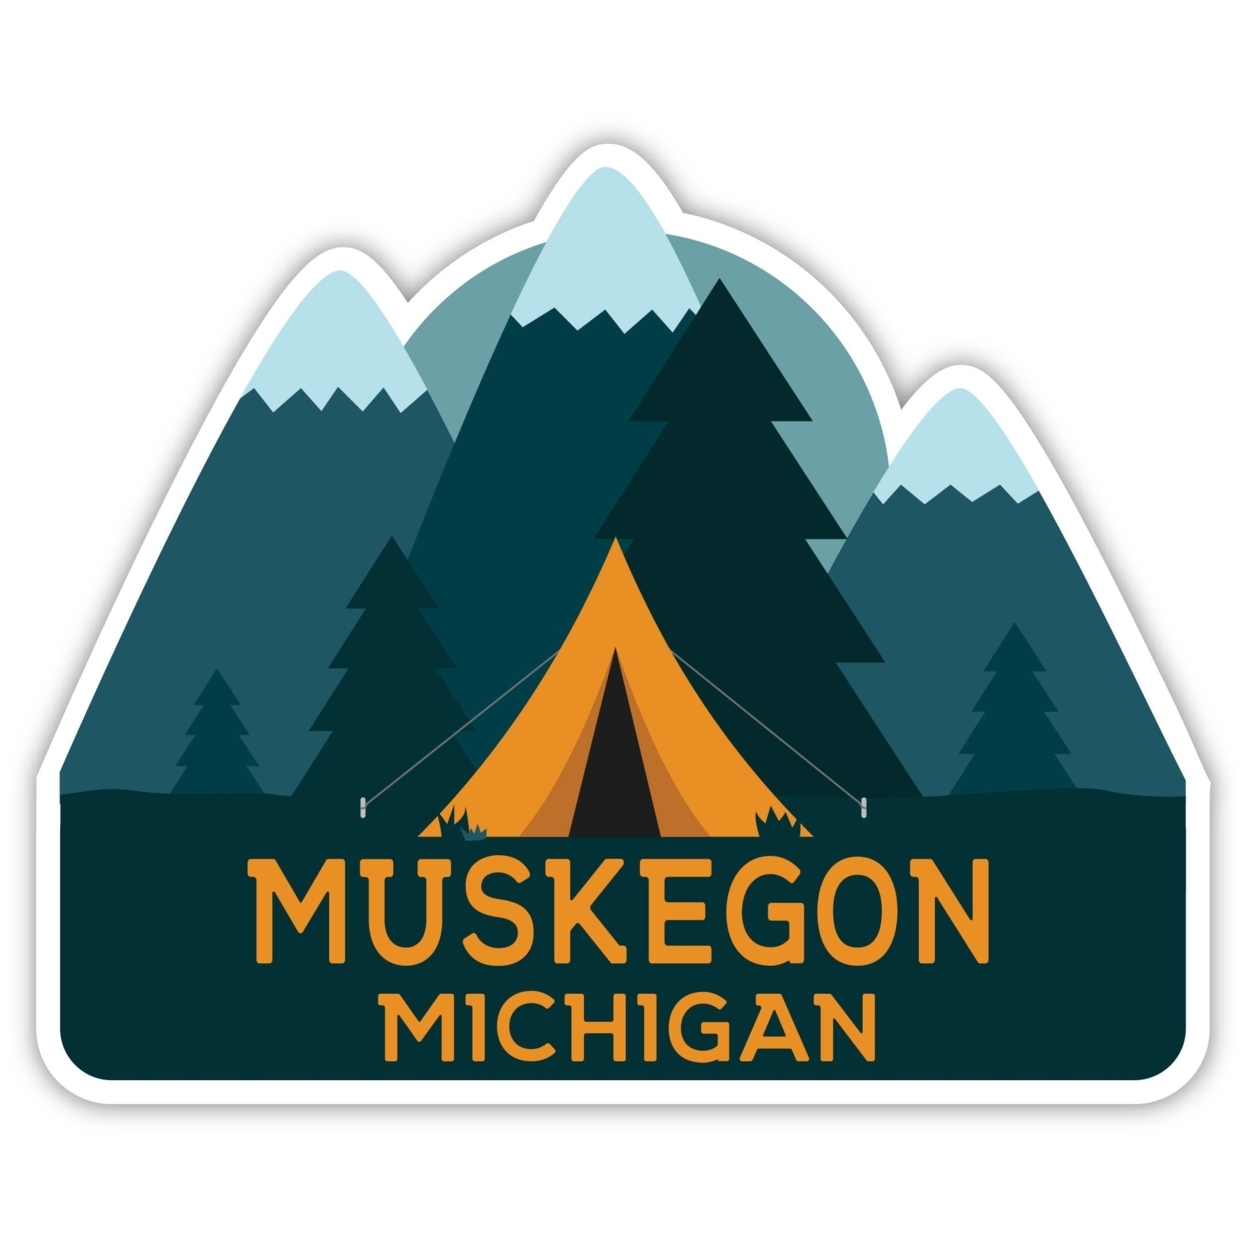 Muskegon Michigan Souvenir Decorative Stickers (Choose Theme And Size) - Single Unit, 2-Inch, Adventures Awaits